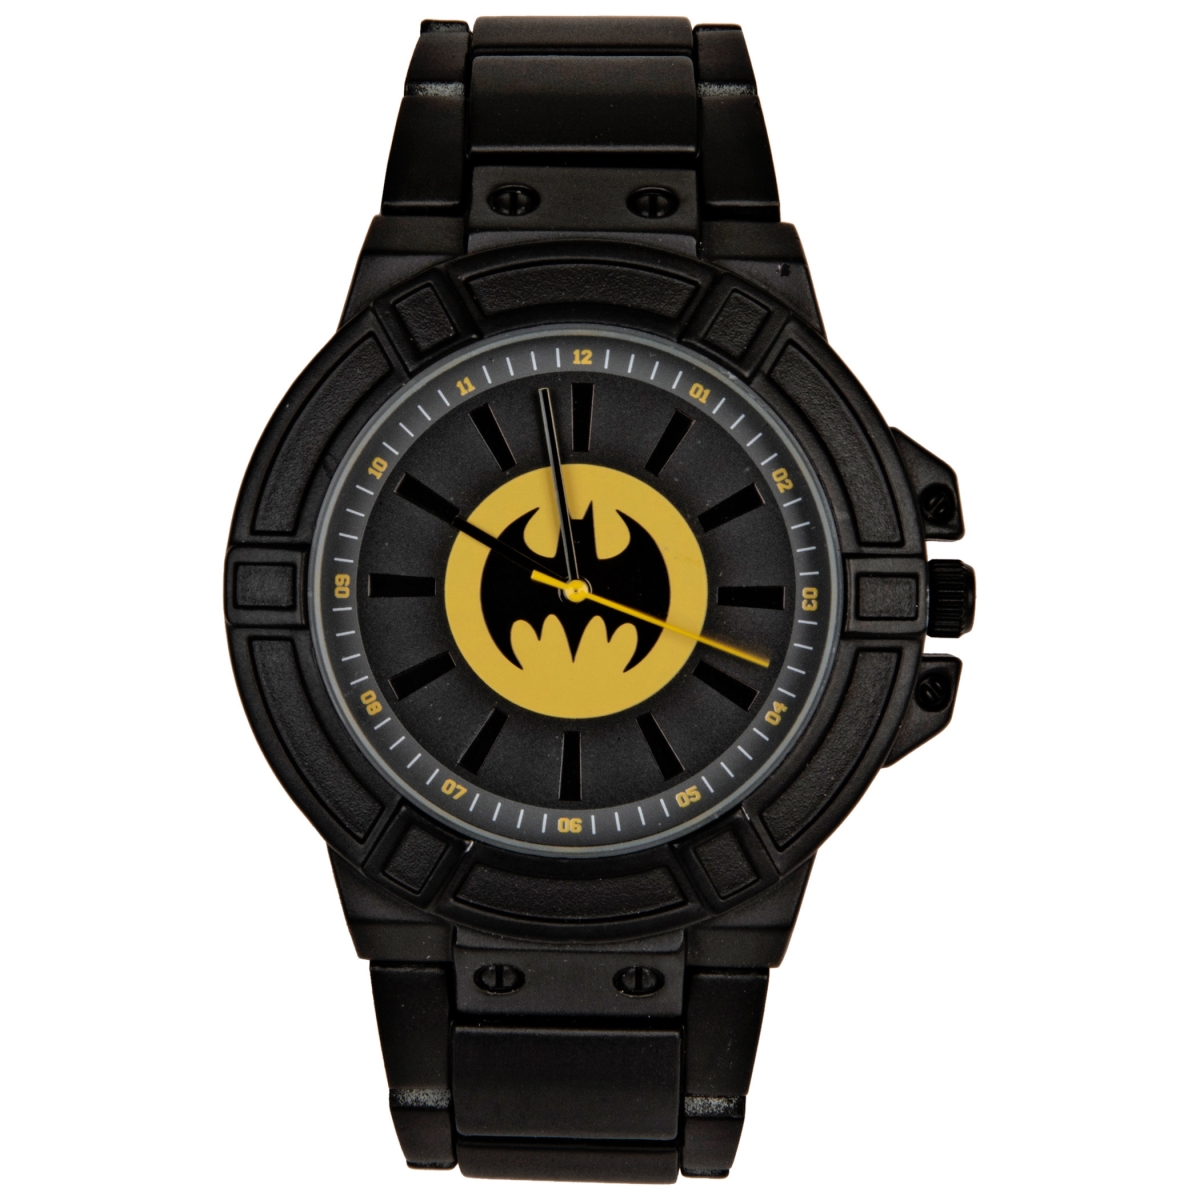 Picture of Batman 822547 DC Comics Batman Classic Symbol Watch Face with Black Metal Band